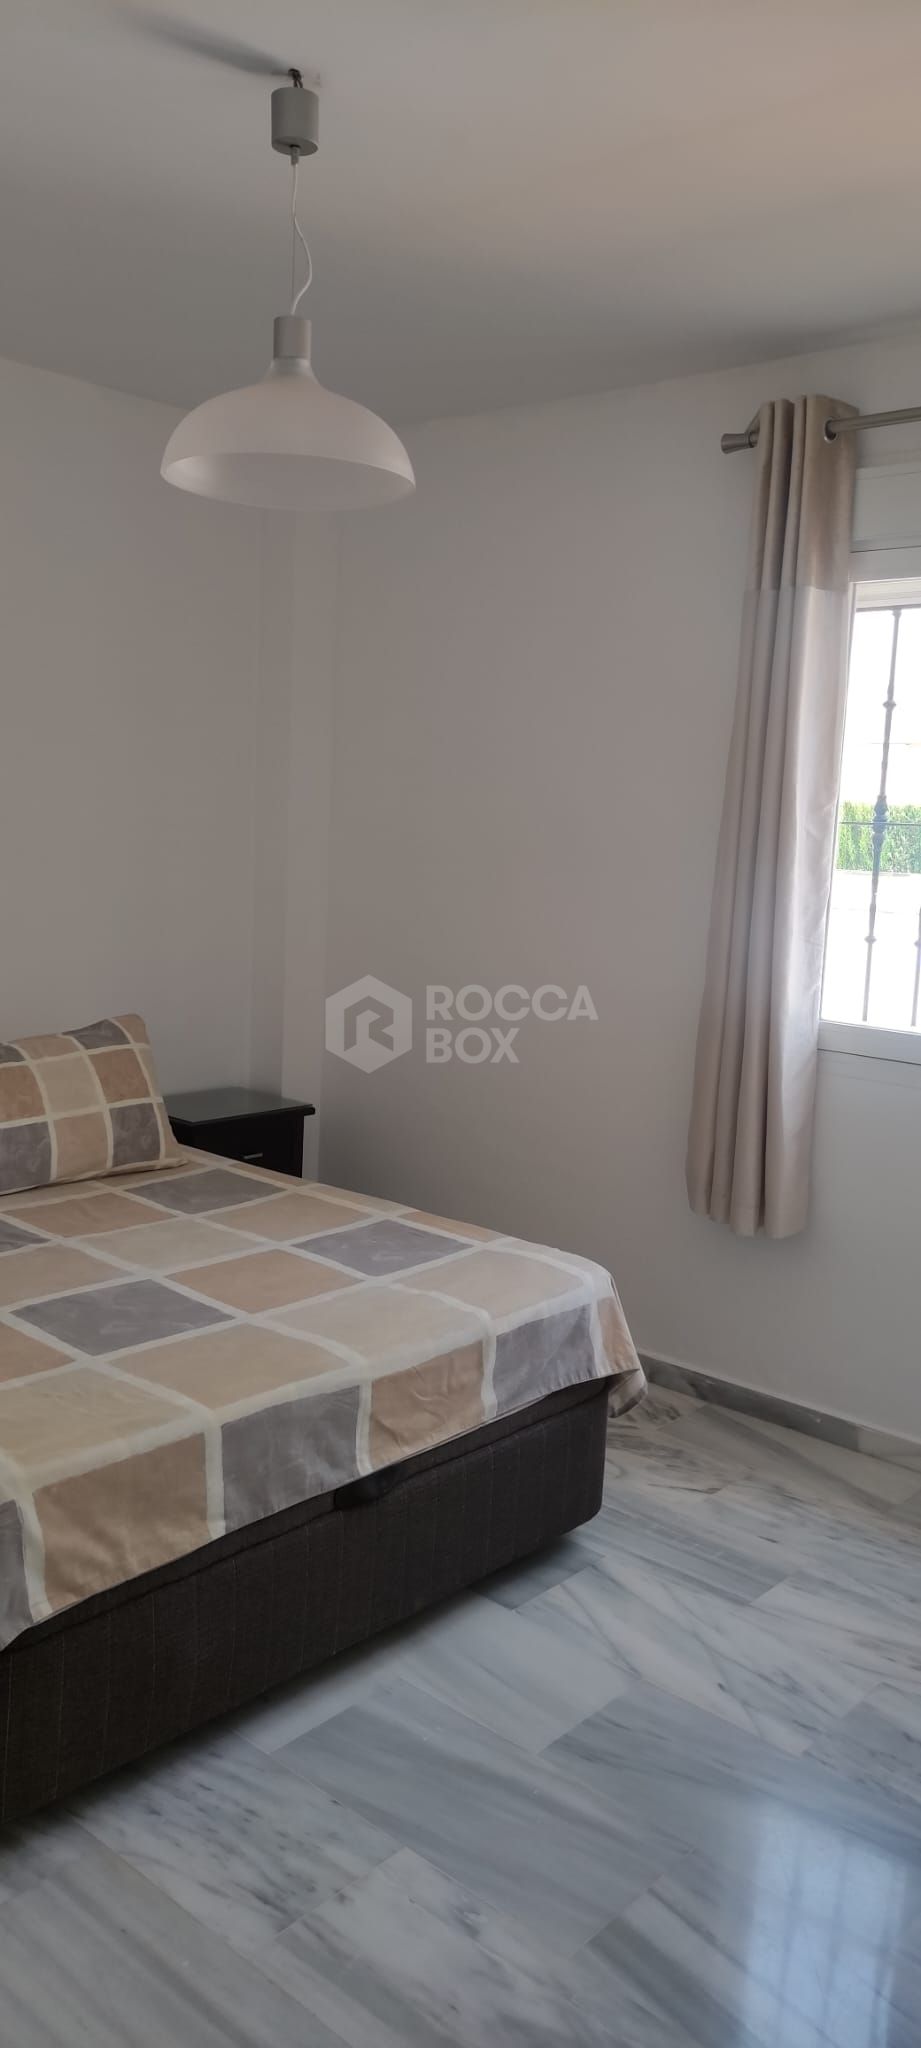 4 bedrooms groudfloor apartment in Residencia La Ola